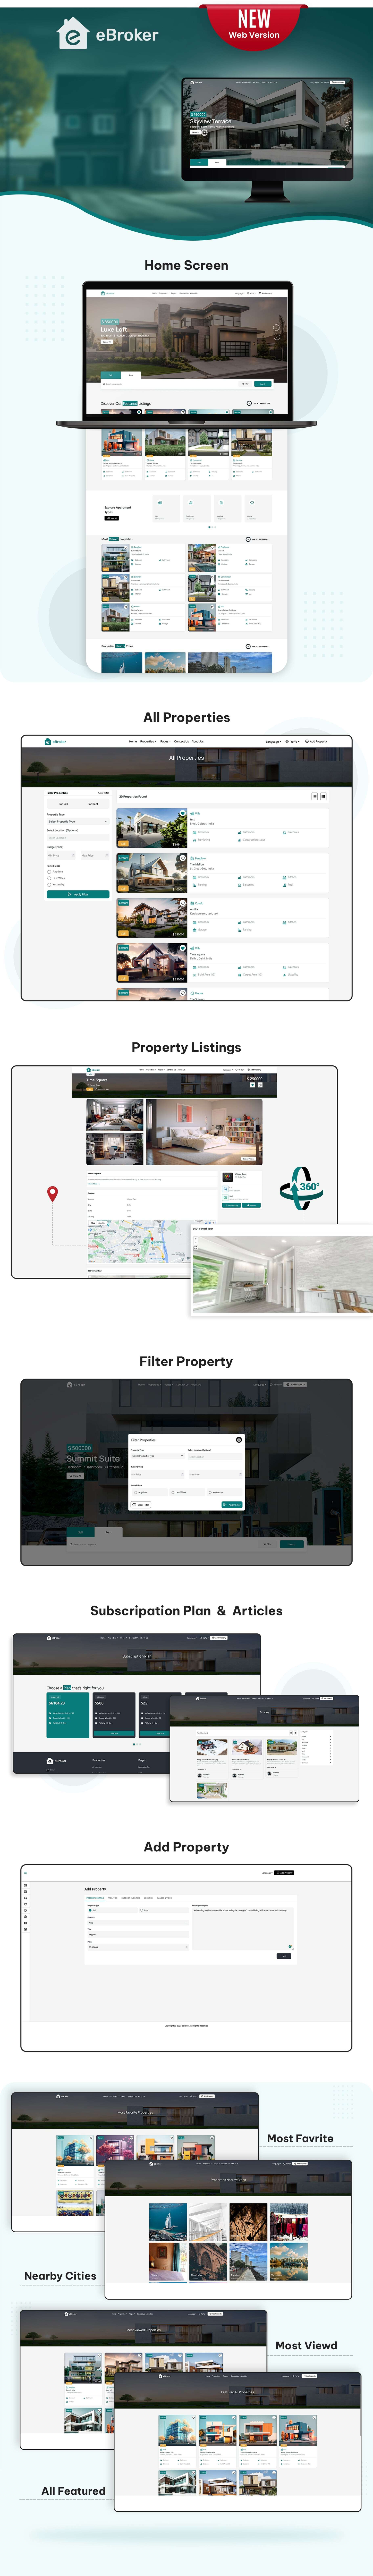 eBroker - Real Estate Property Buy-Rent-Sell Flutter app with Laravel Admin Panel | Web Version - 25